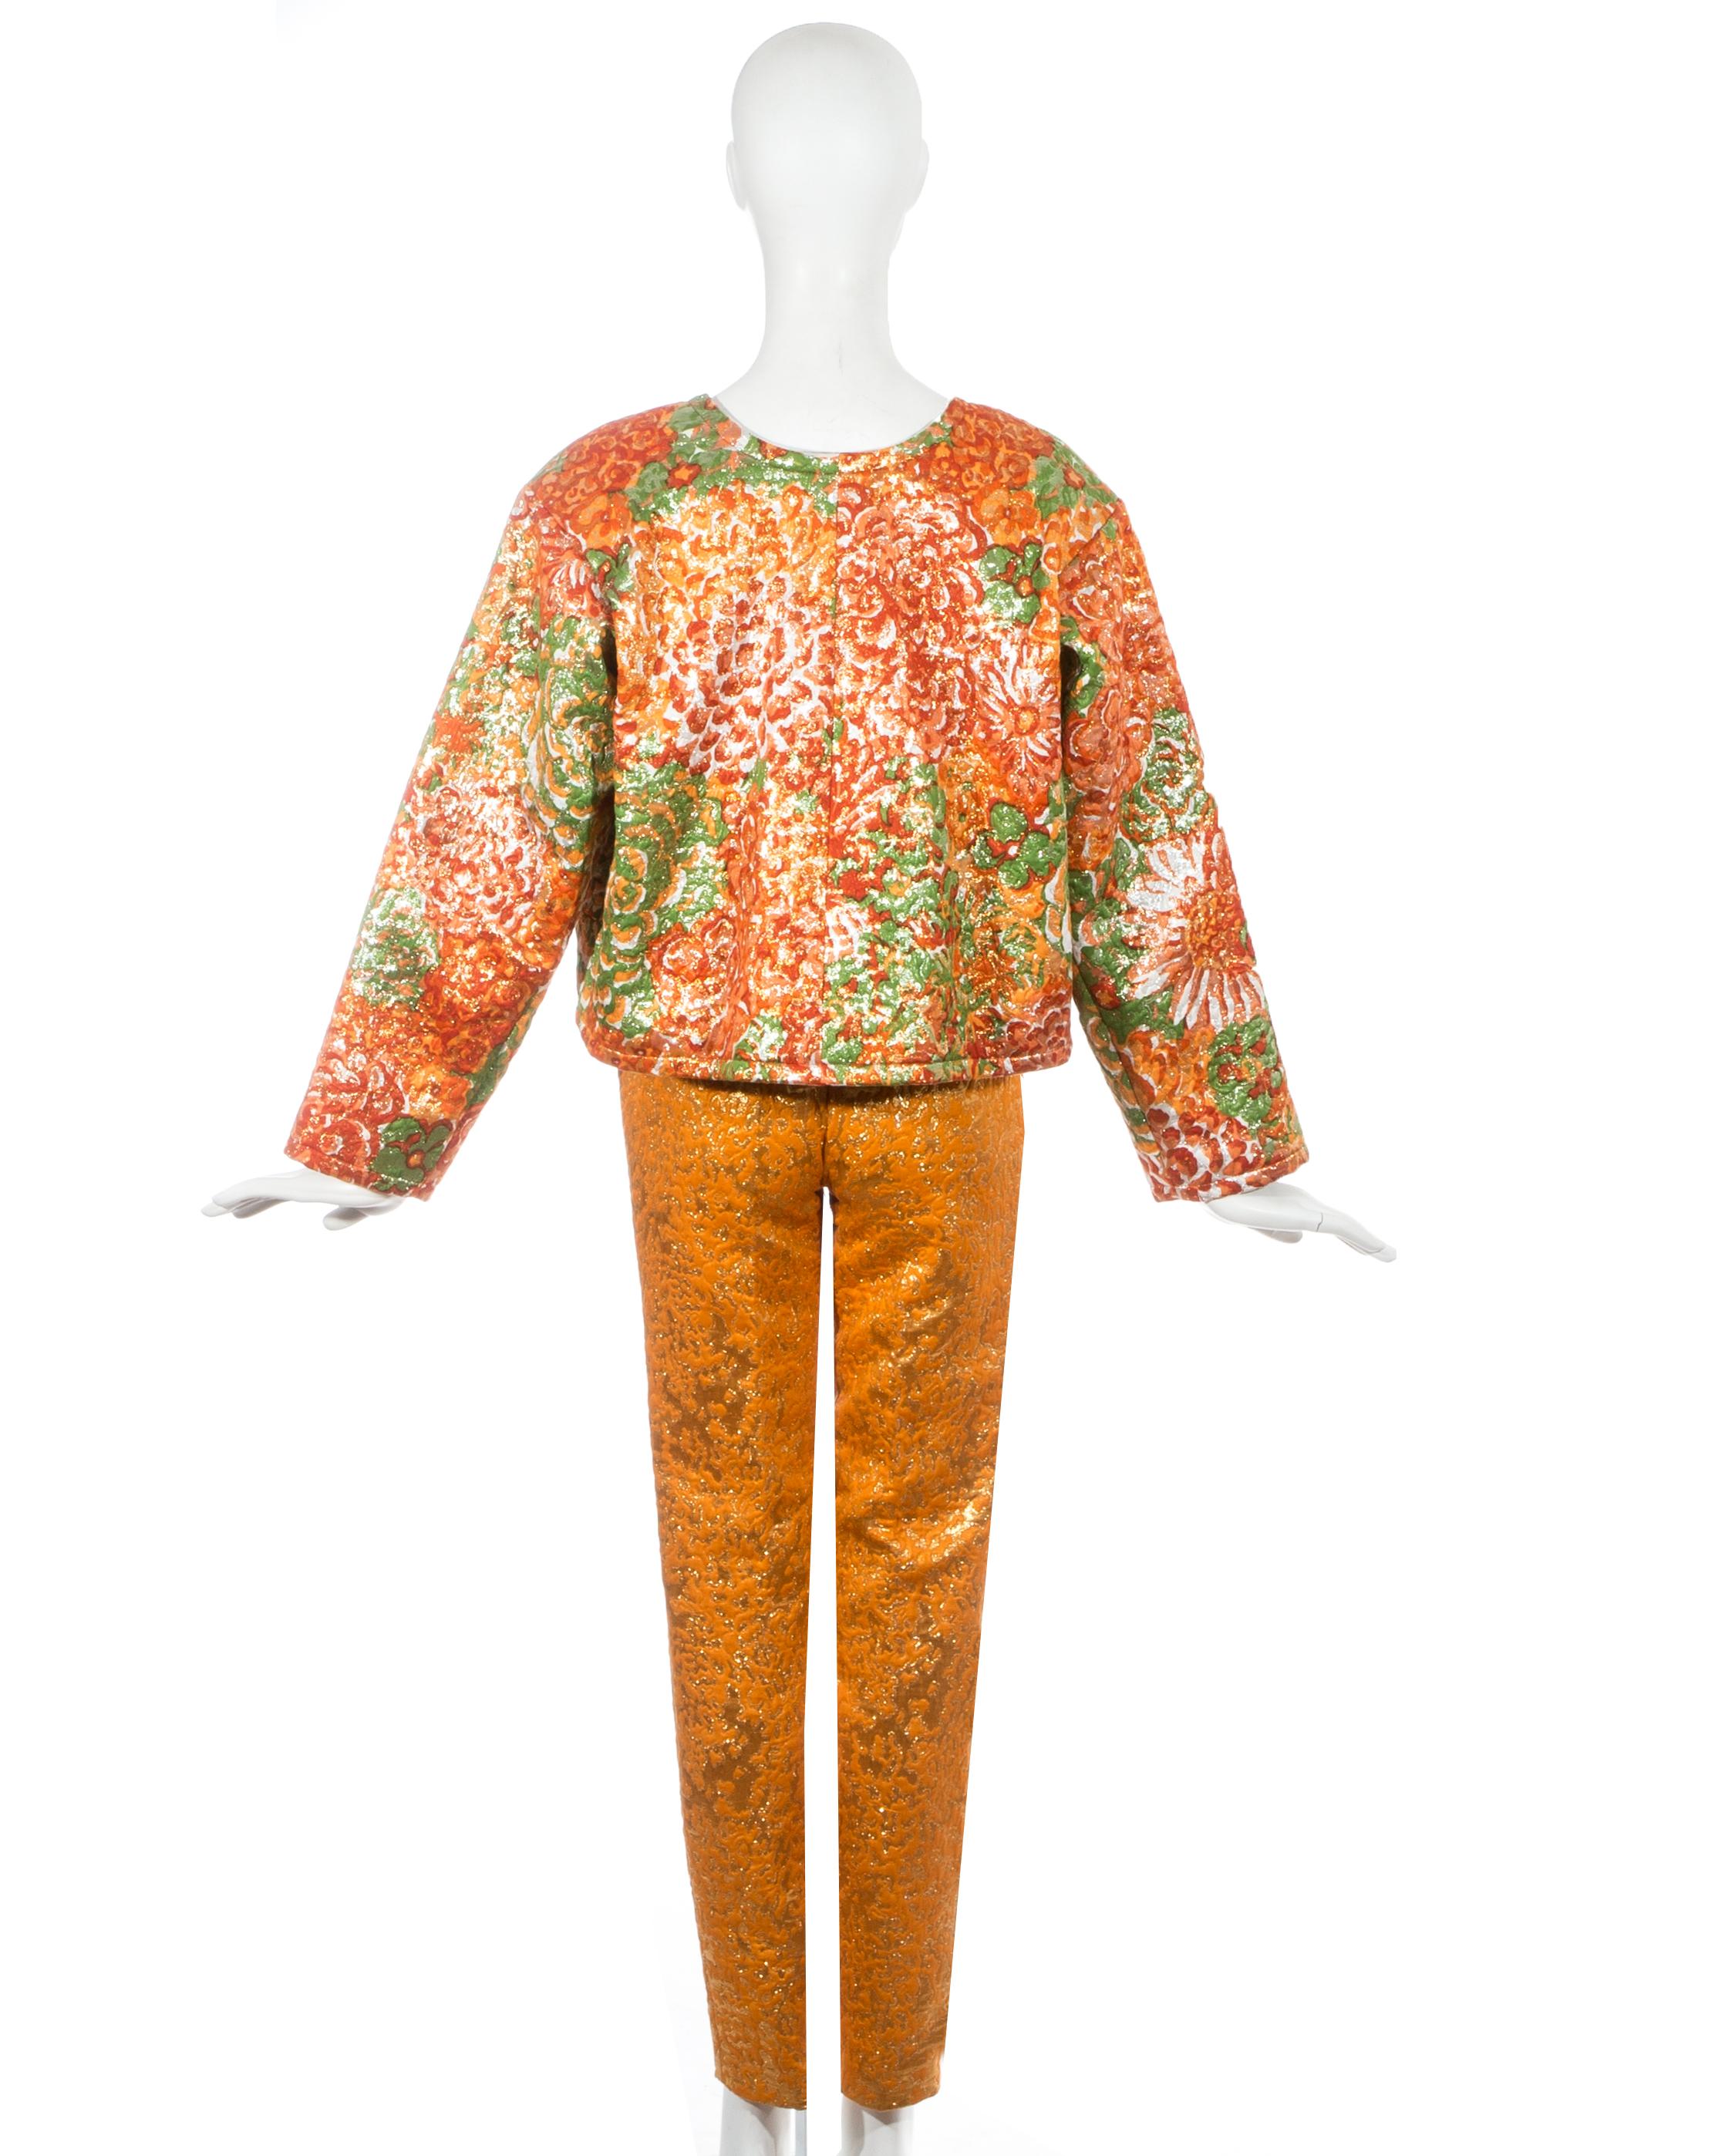 Orange Yves Saint Laurent orange metallic floral brocade evening pant suit, fw 1989